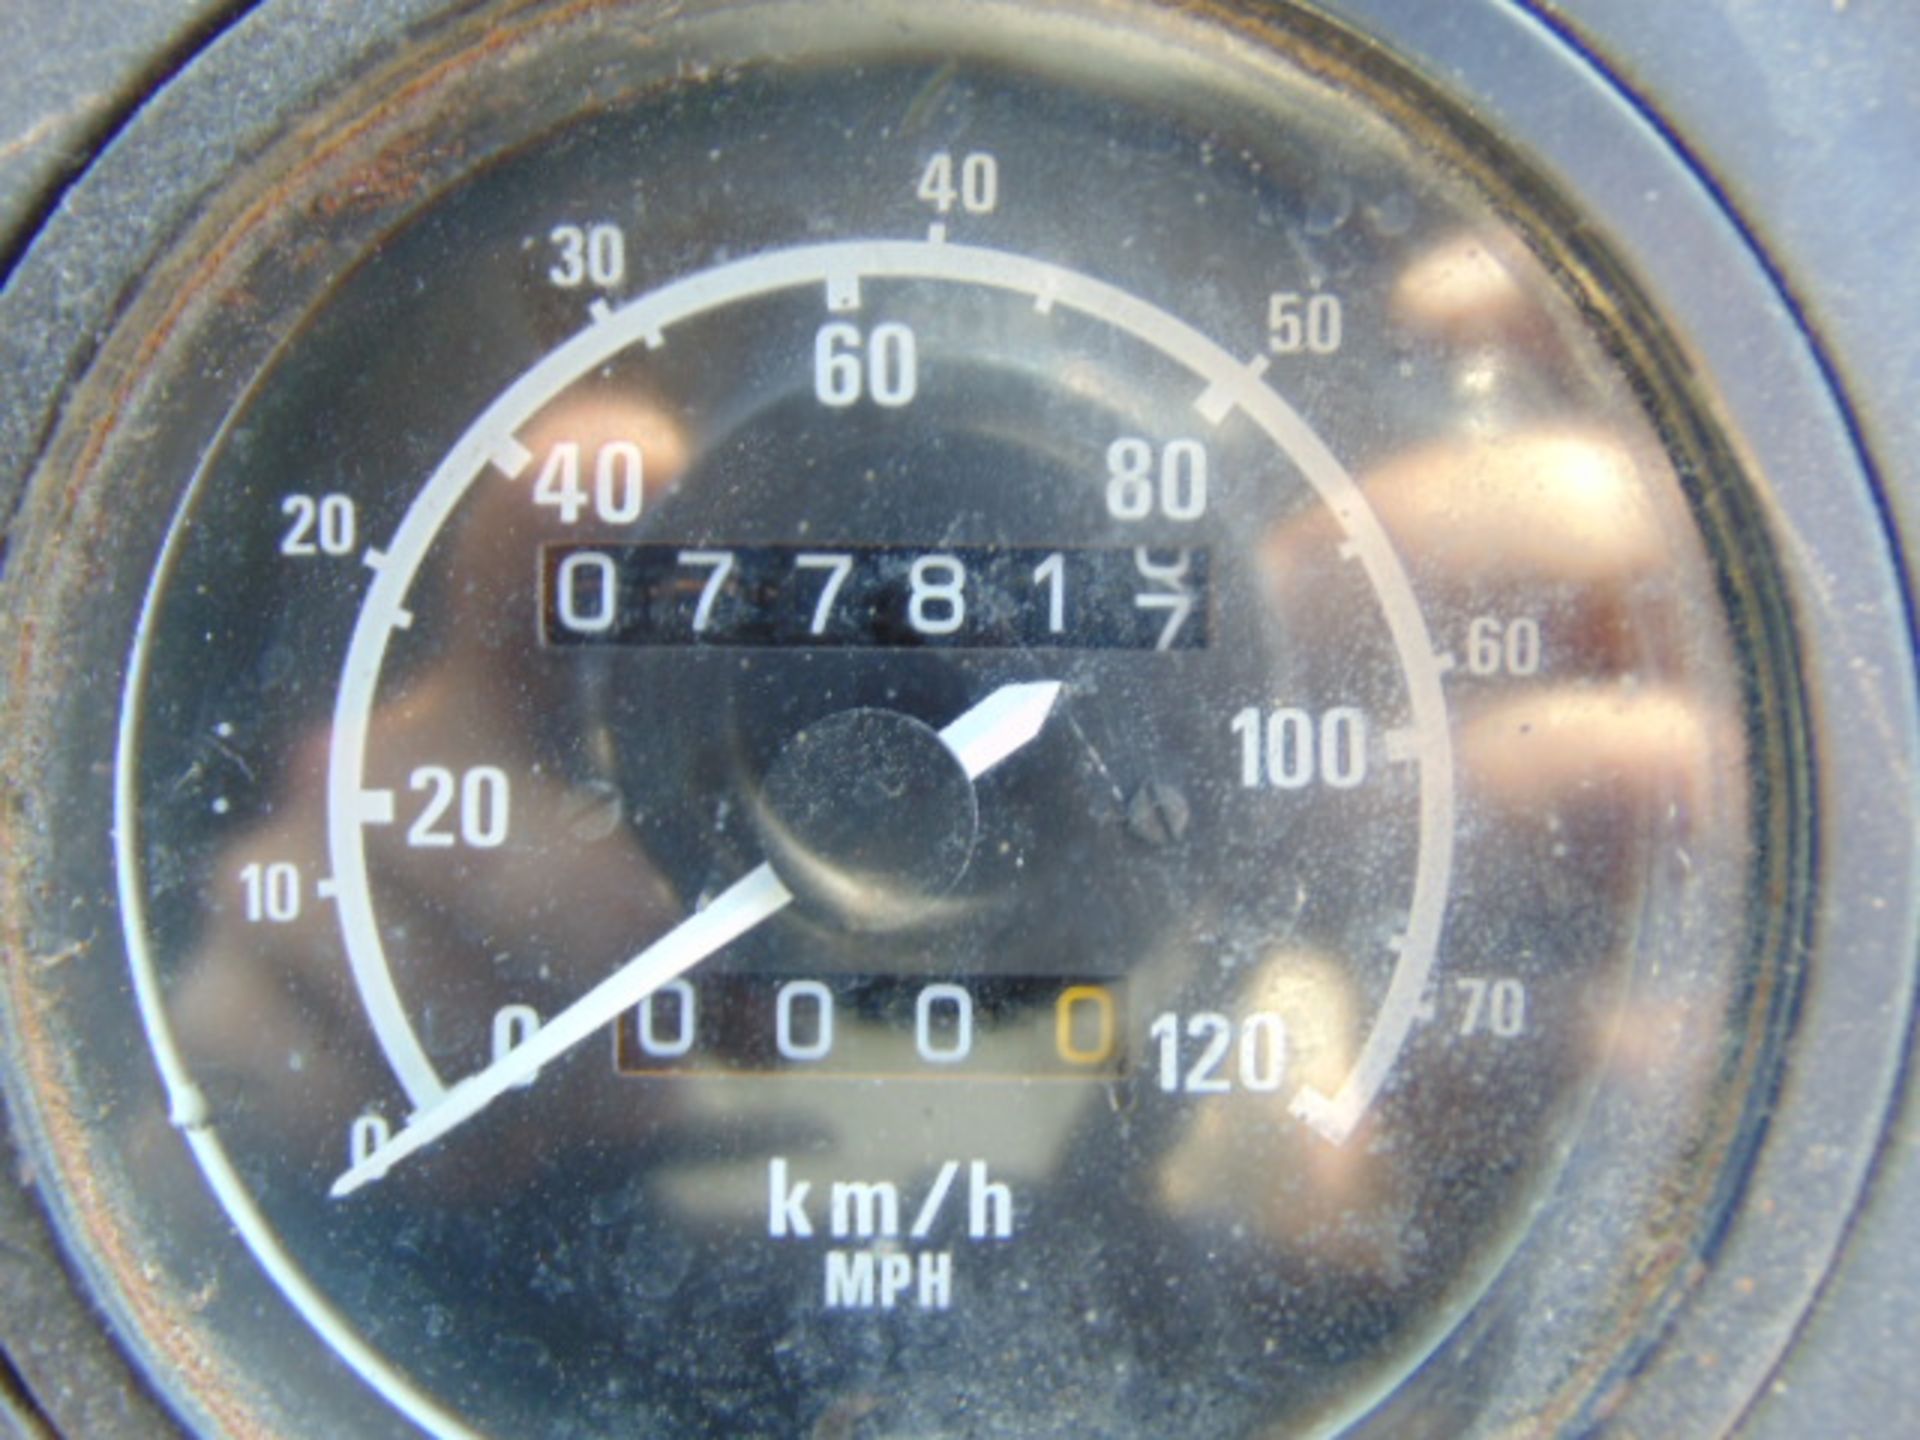 Leyland Daf 45/150 4 x 4 - Image 12 of 13